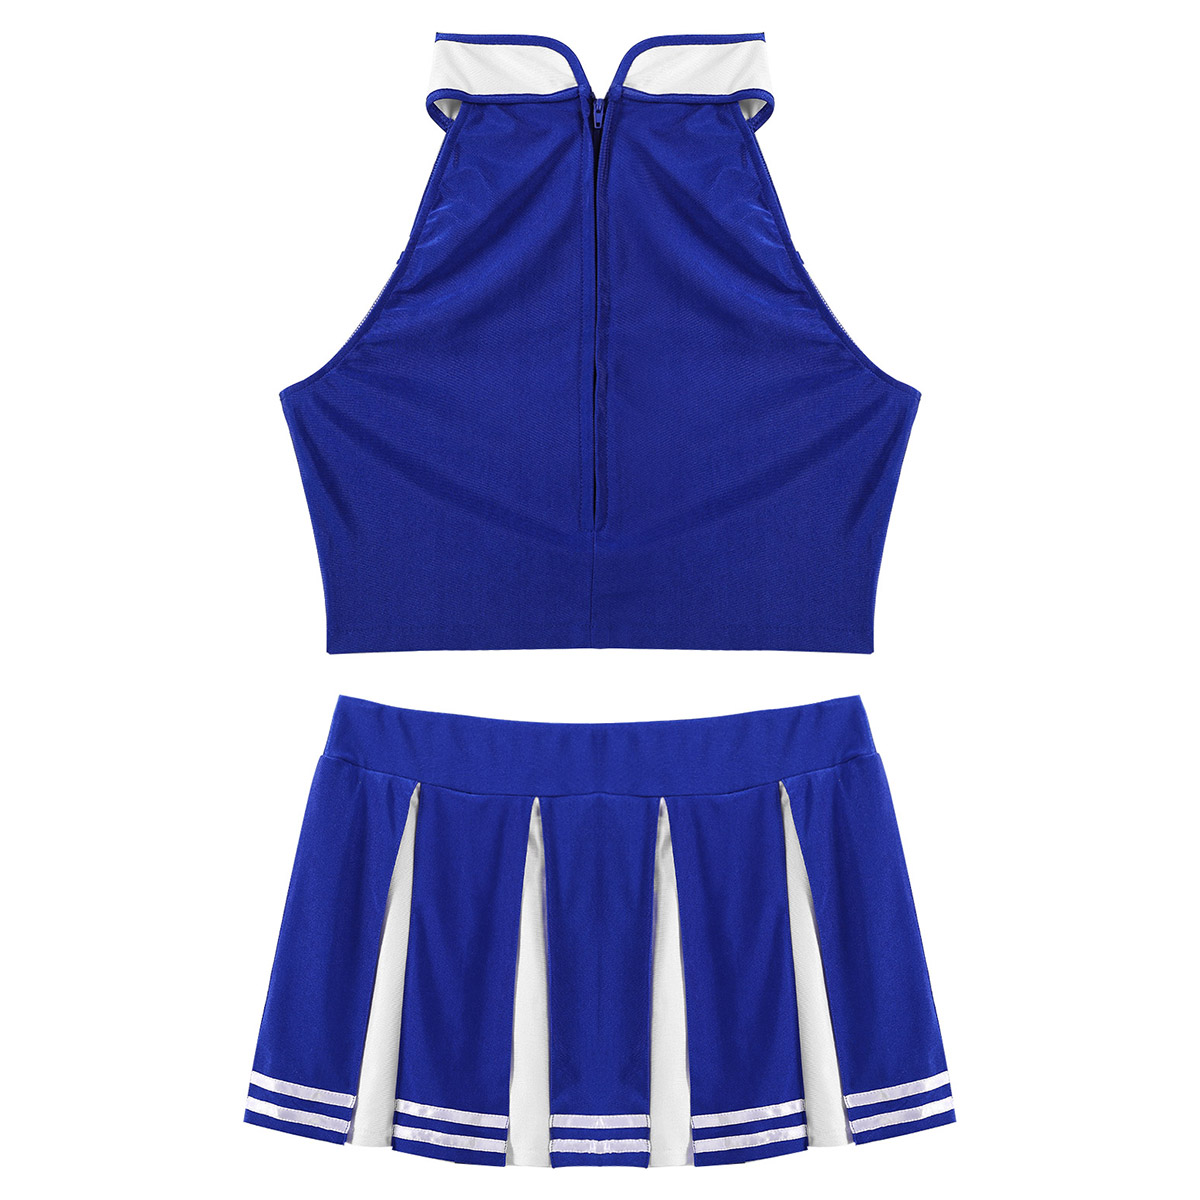 Women Cheerleader Costume Stand Collar Sleeveless Crop Top with Mini Pleated Skirt Set Team Dance Outfit Cheerleading Uniforms